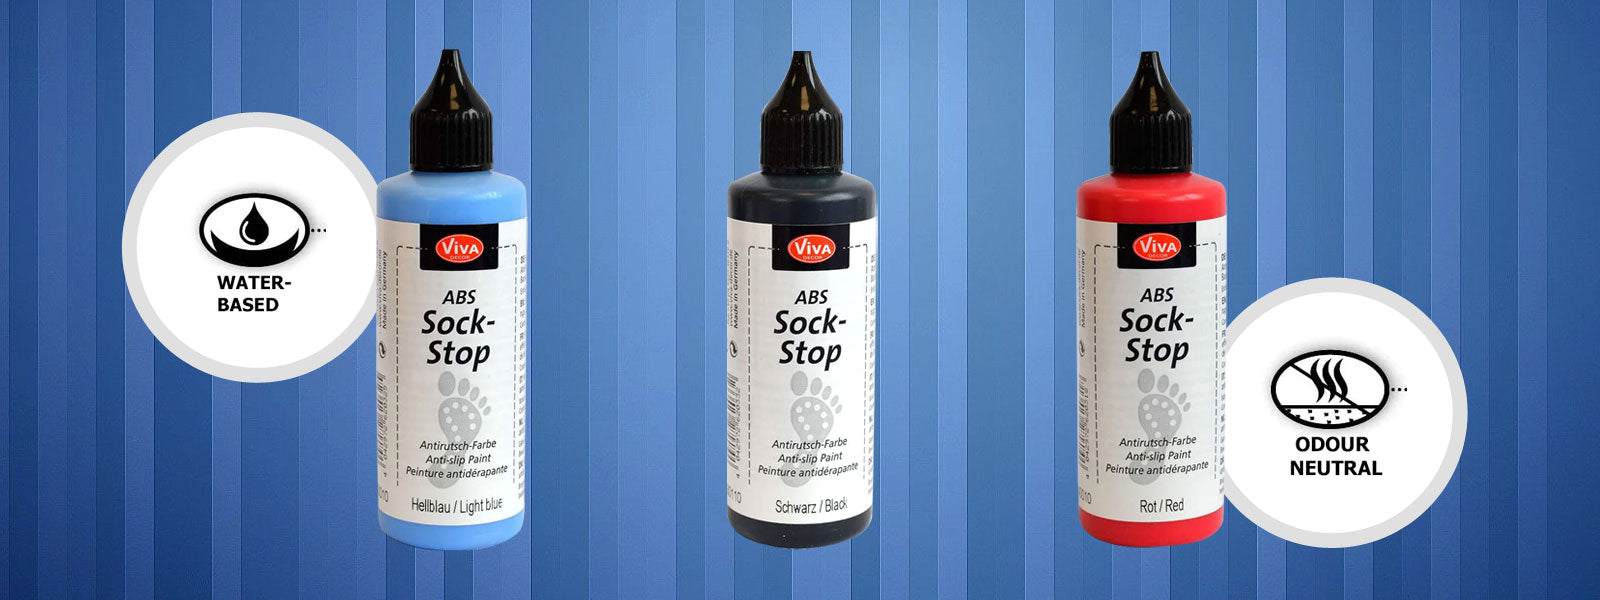 Viva Decor ABS Sock Stop non slip Liquid 2,77 fl oz,ABS anti skid